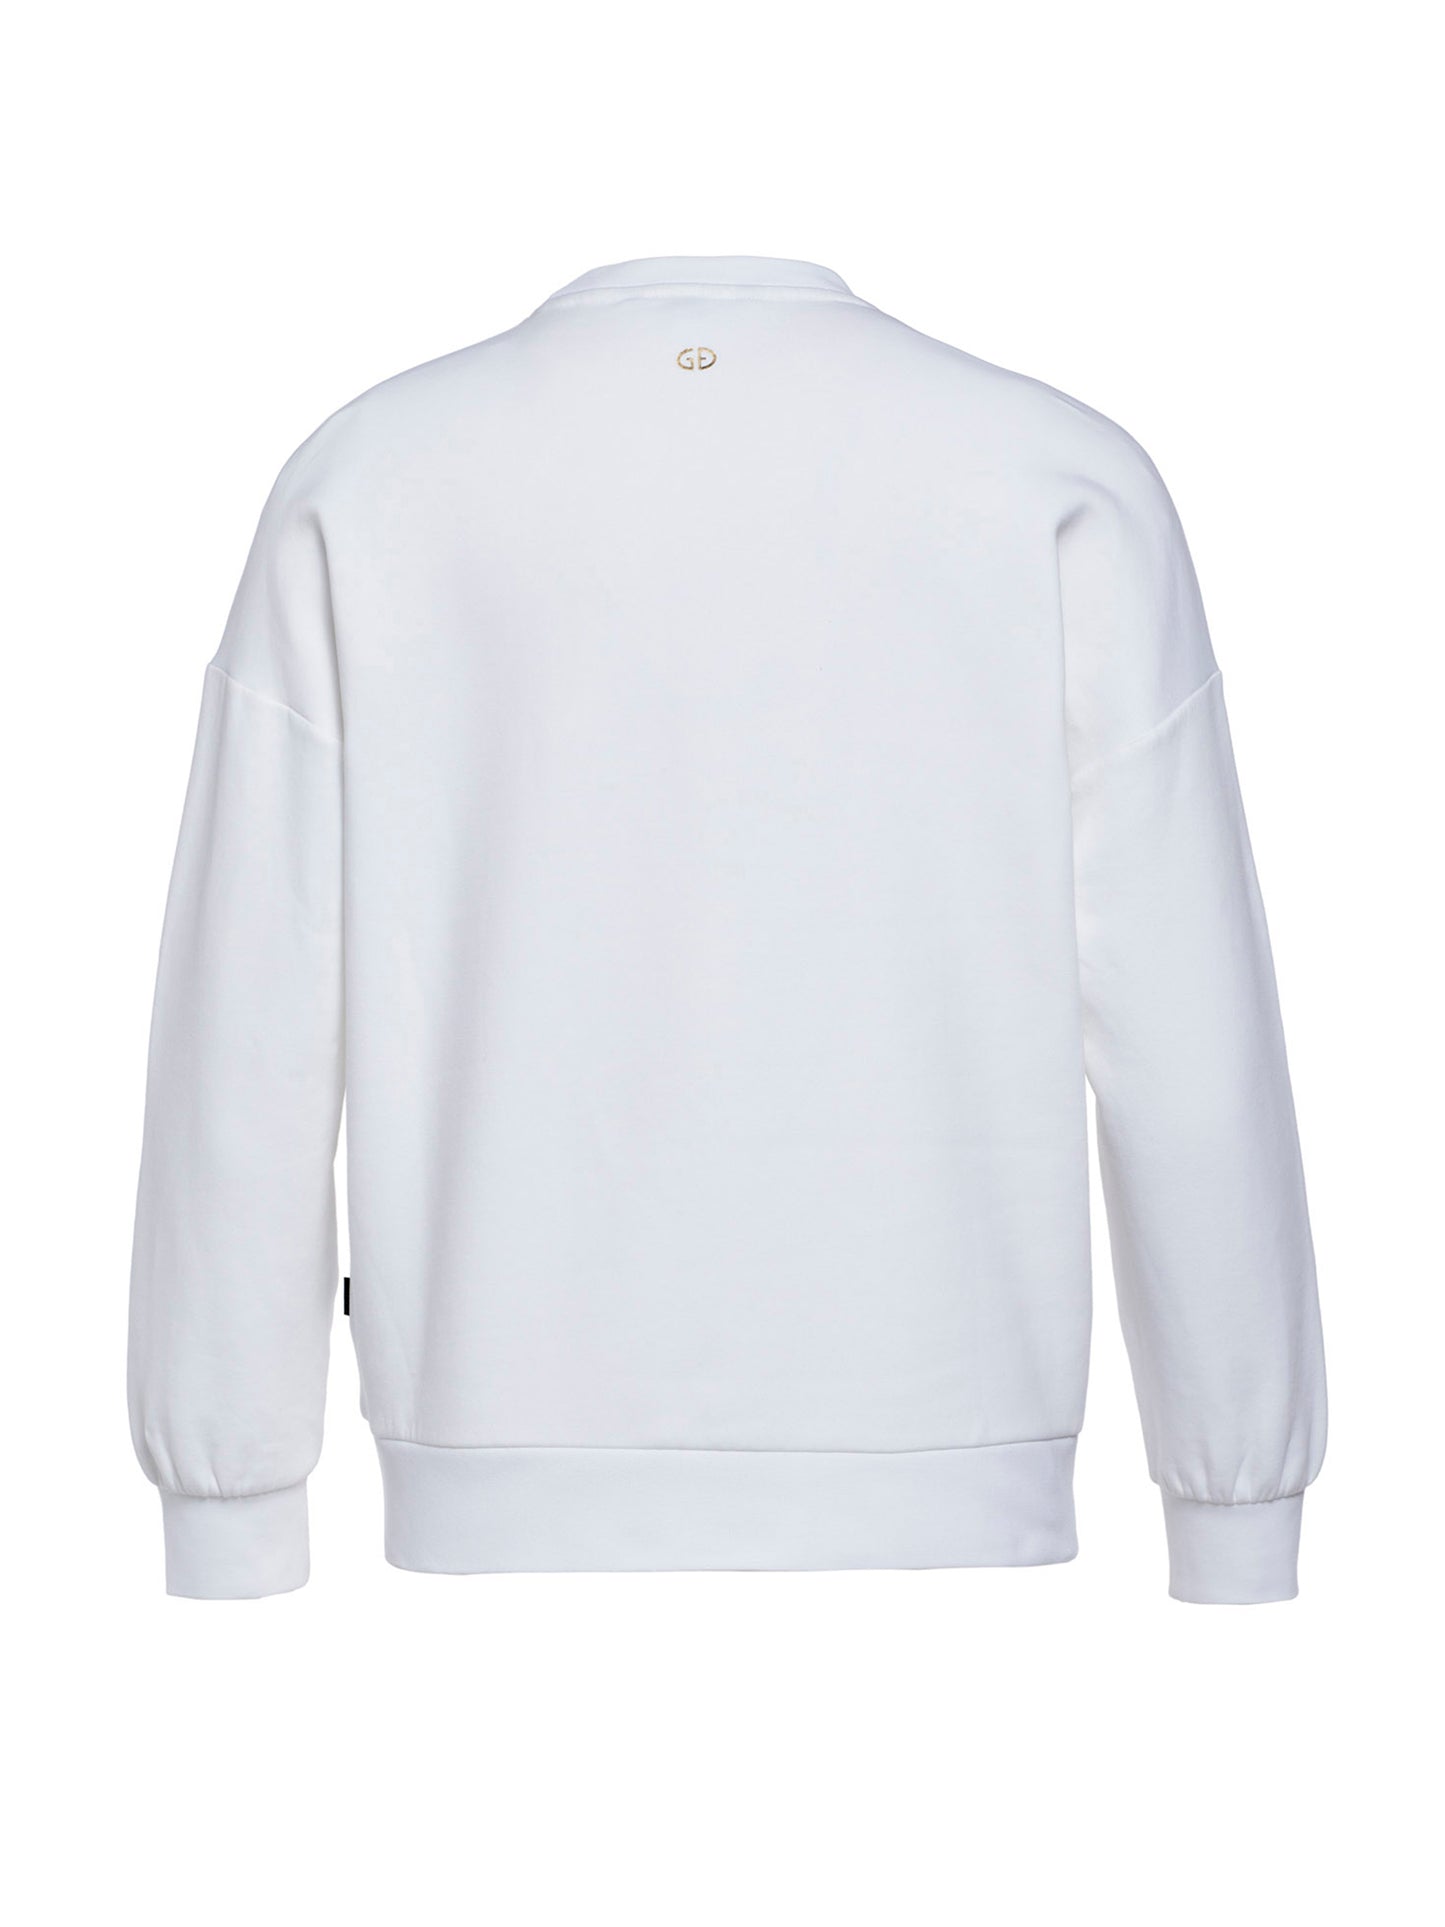 HAVEN sweater white